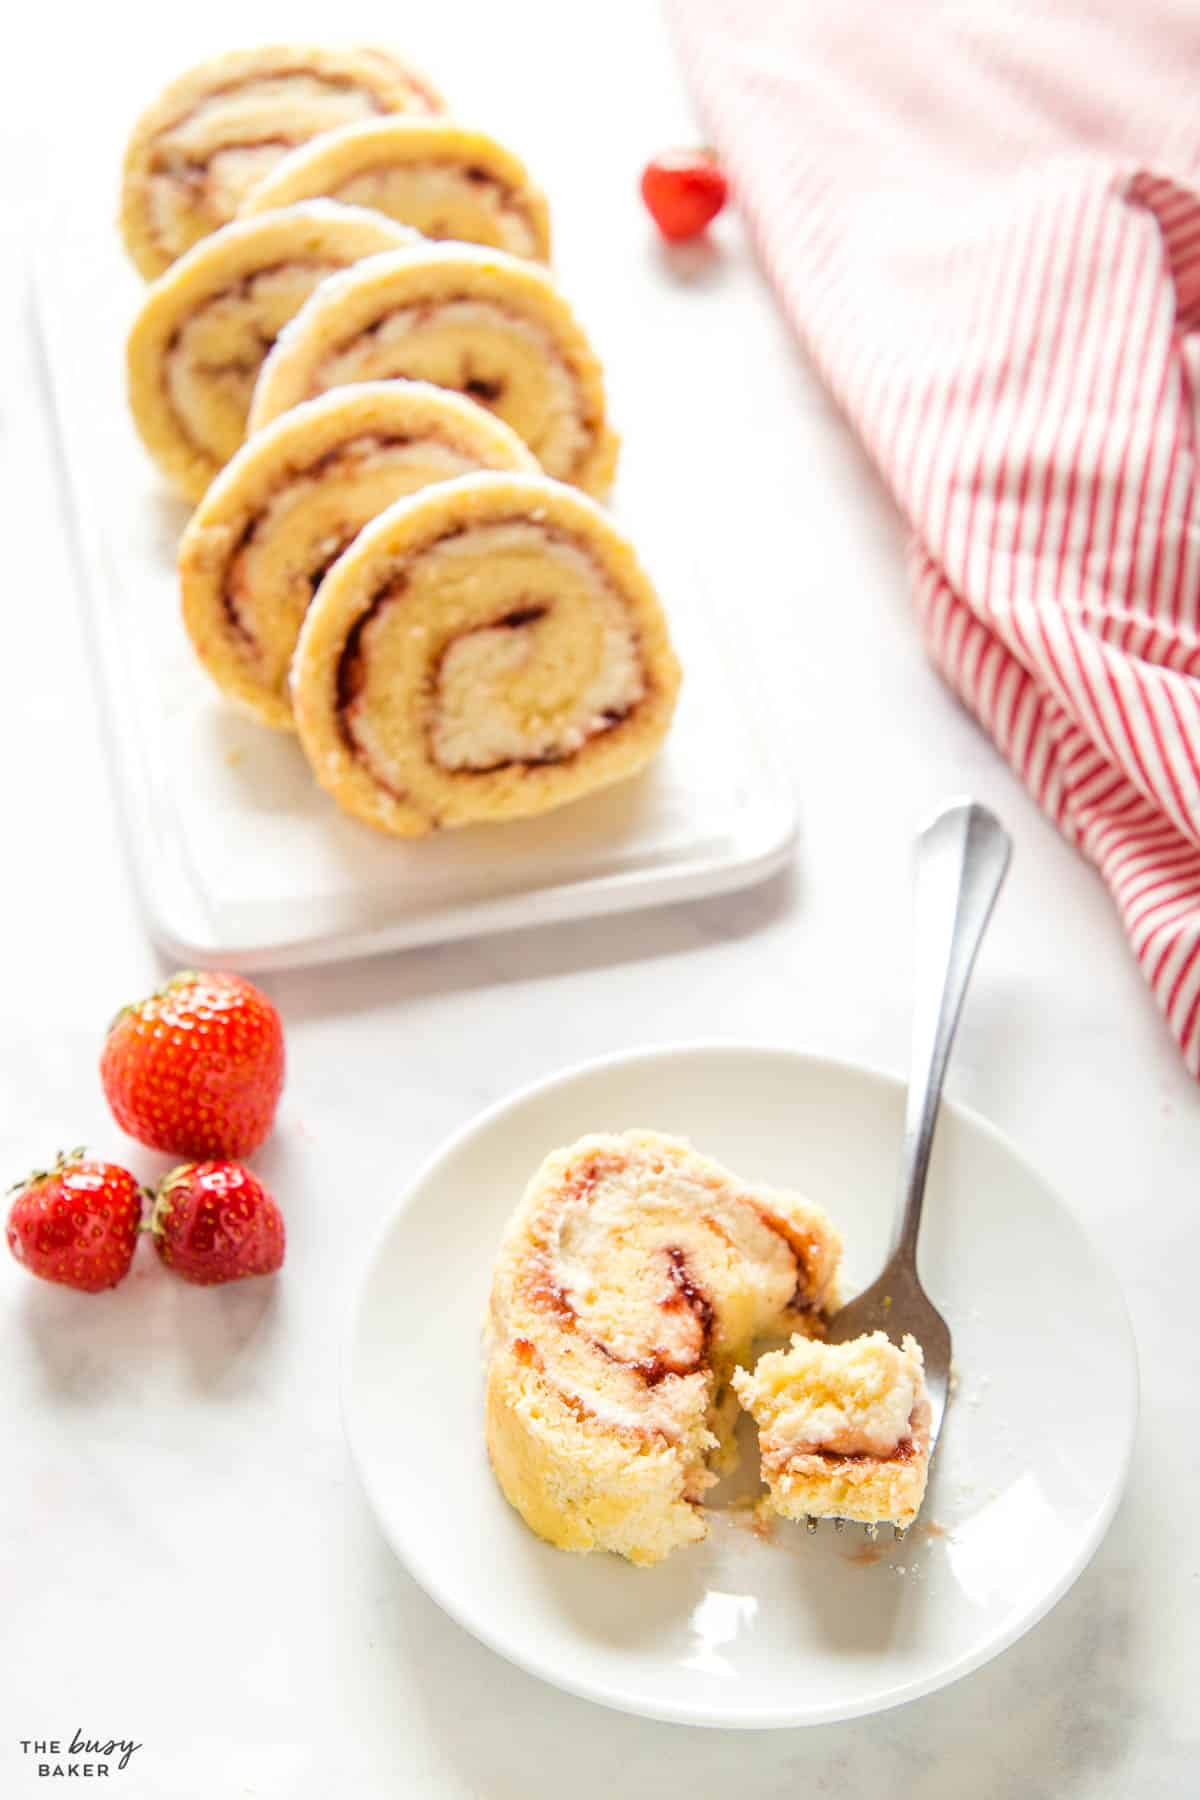 rolled vanilla dessert slice with cream and strawberry jam